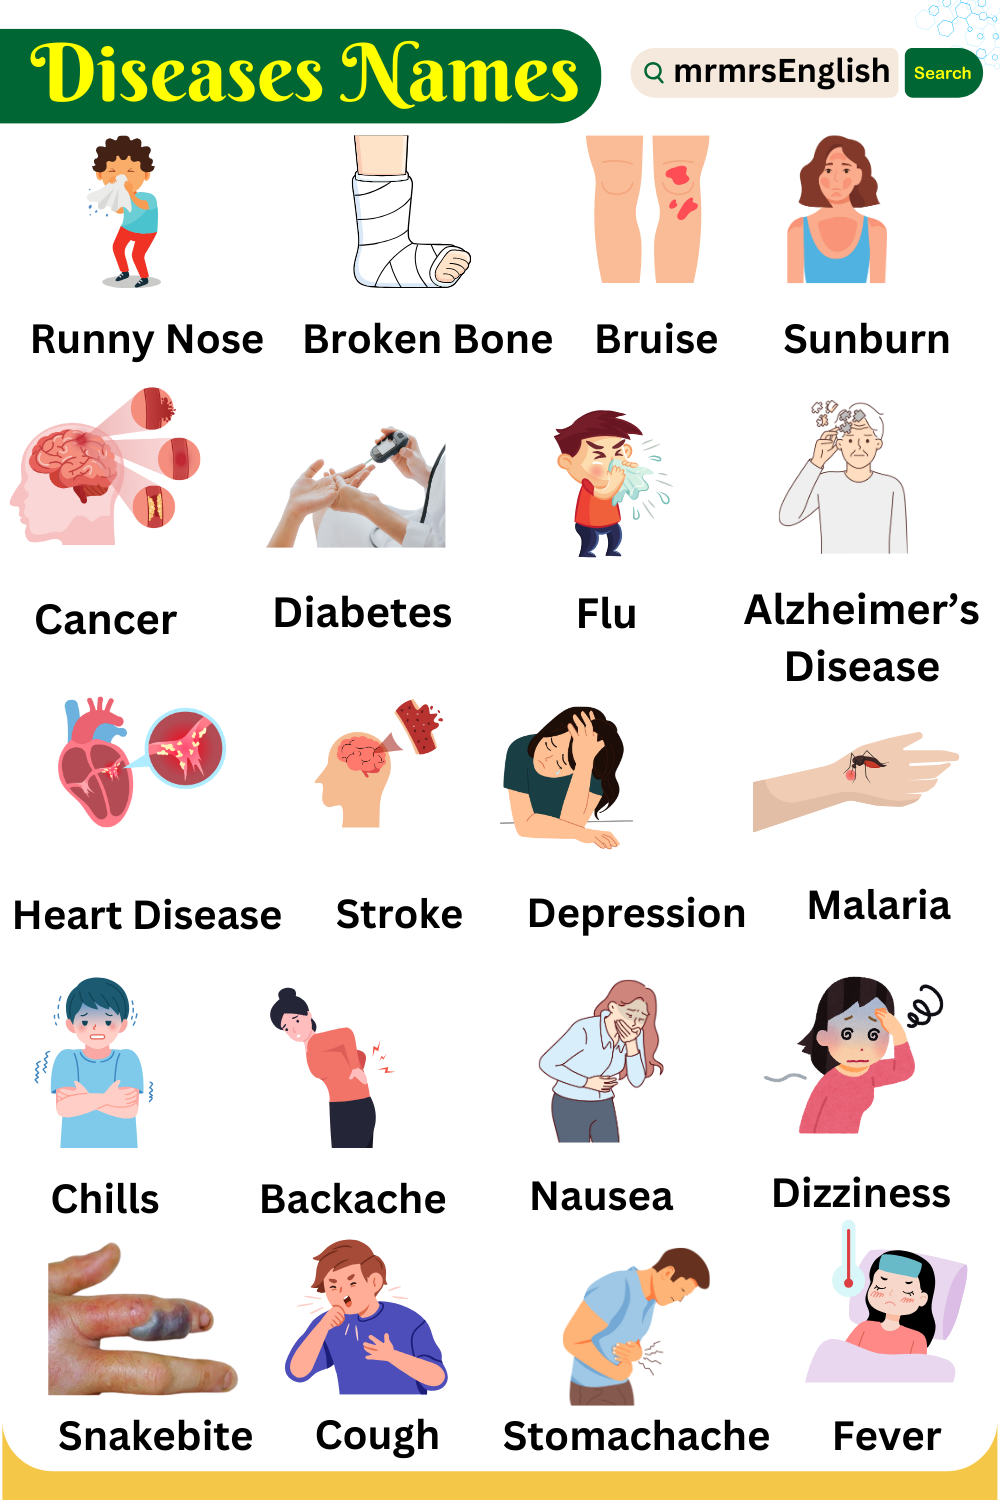 Disease Names in English